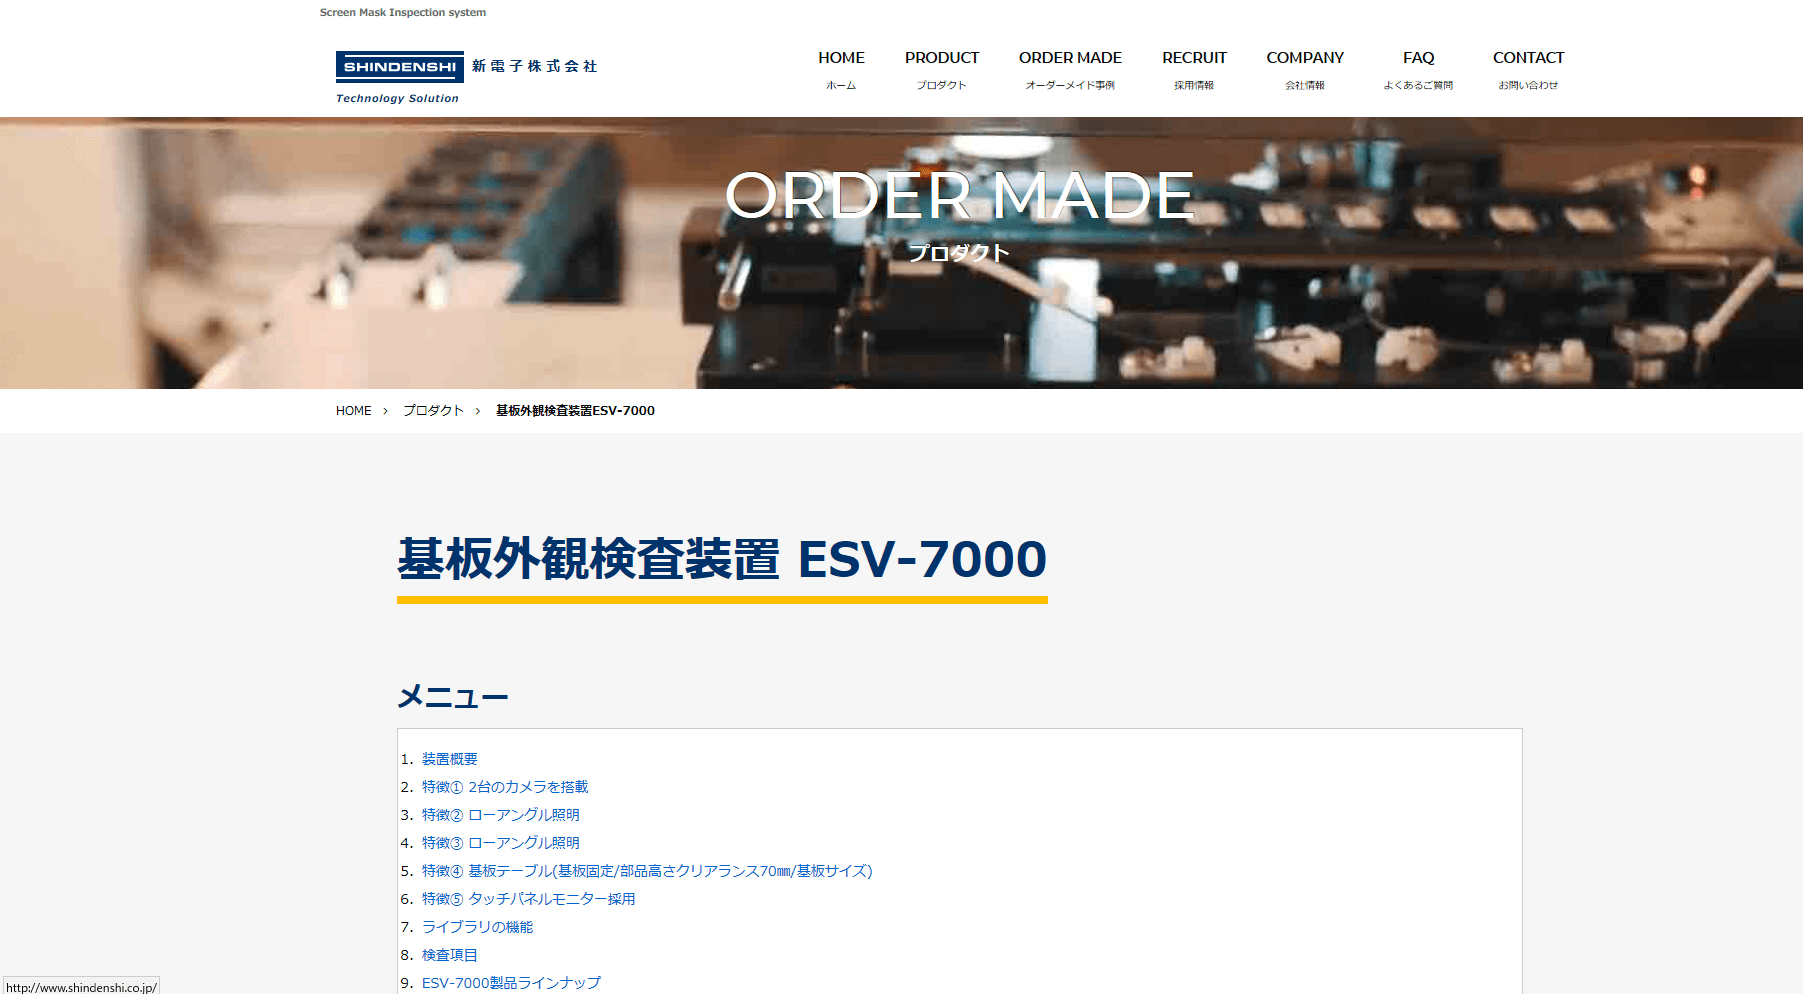 ESV-7000